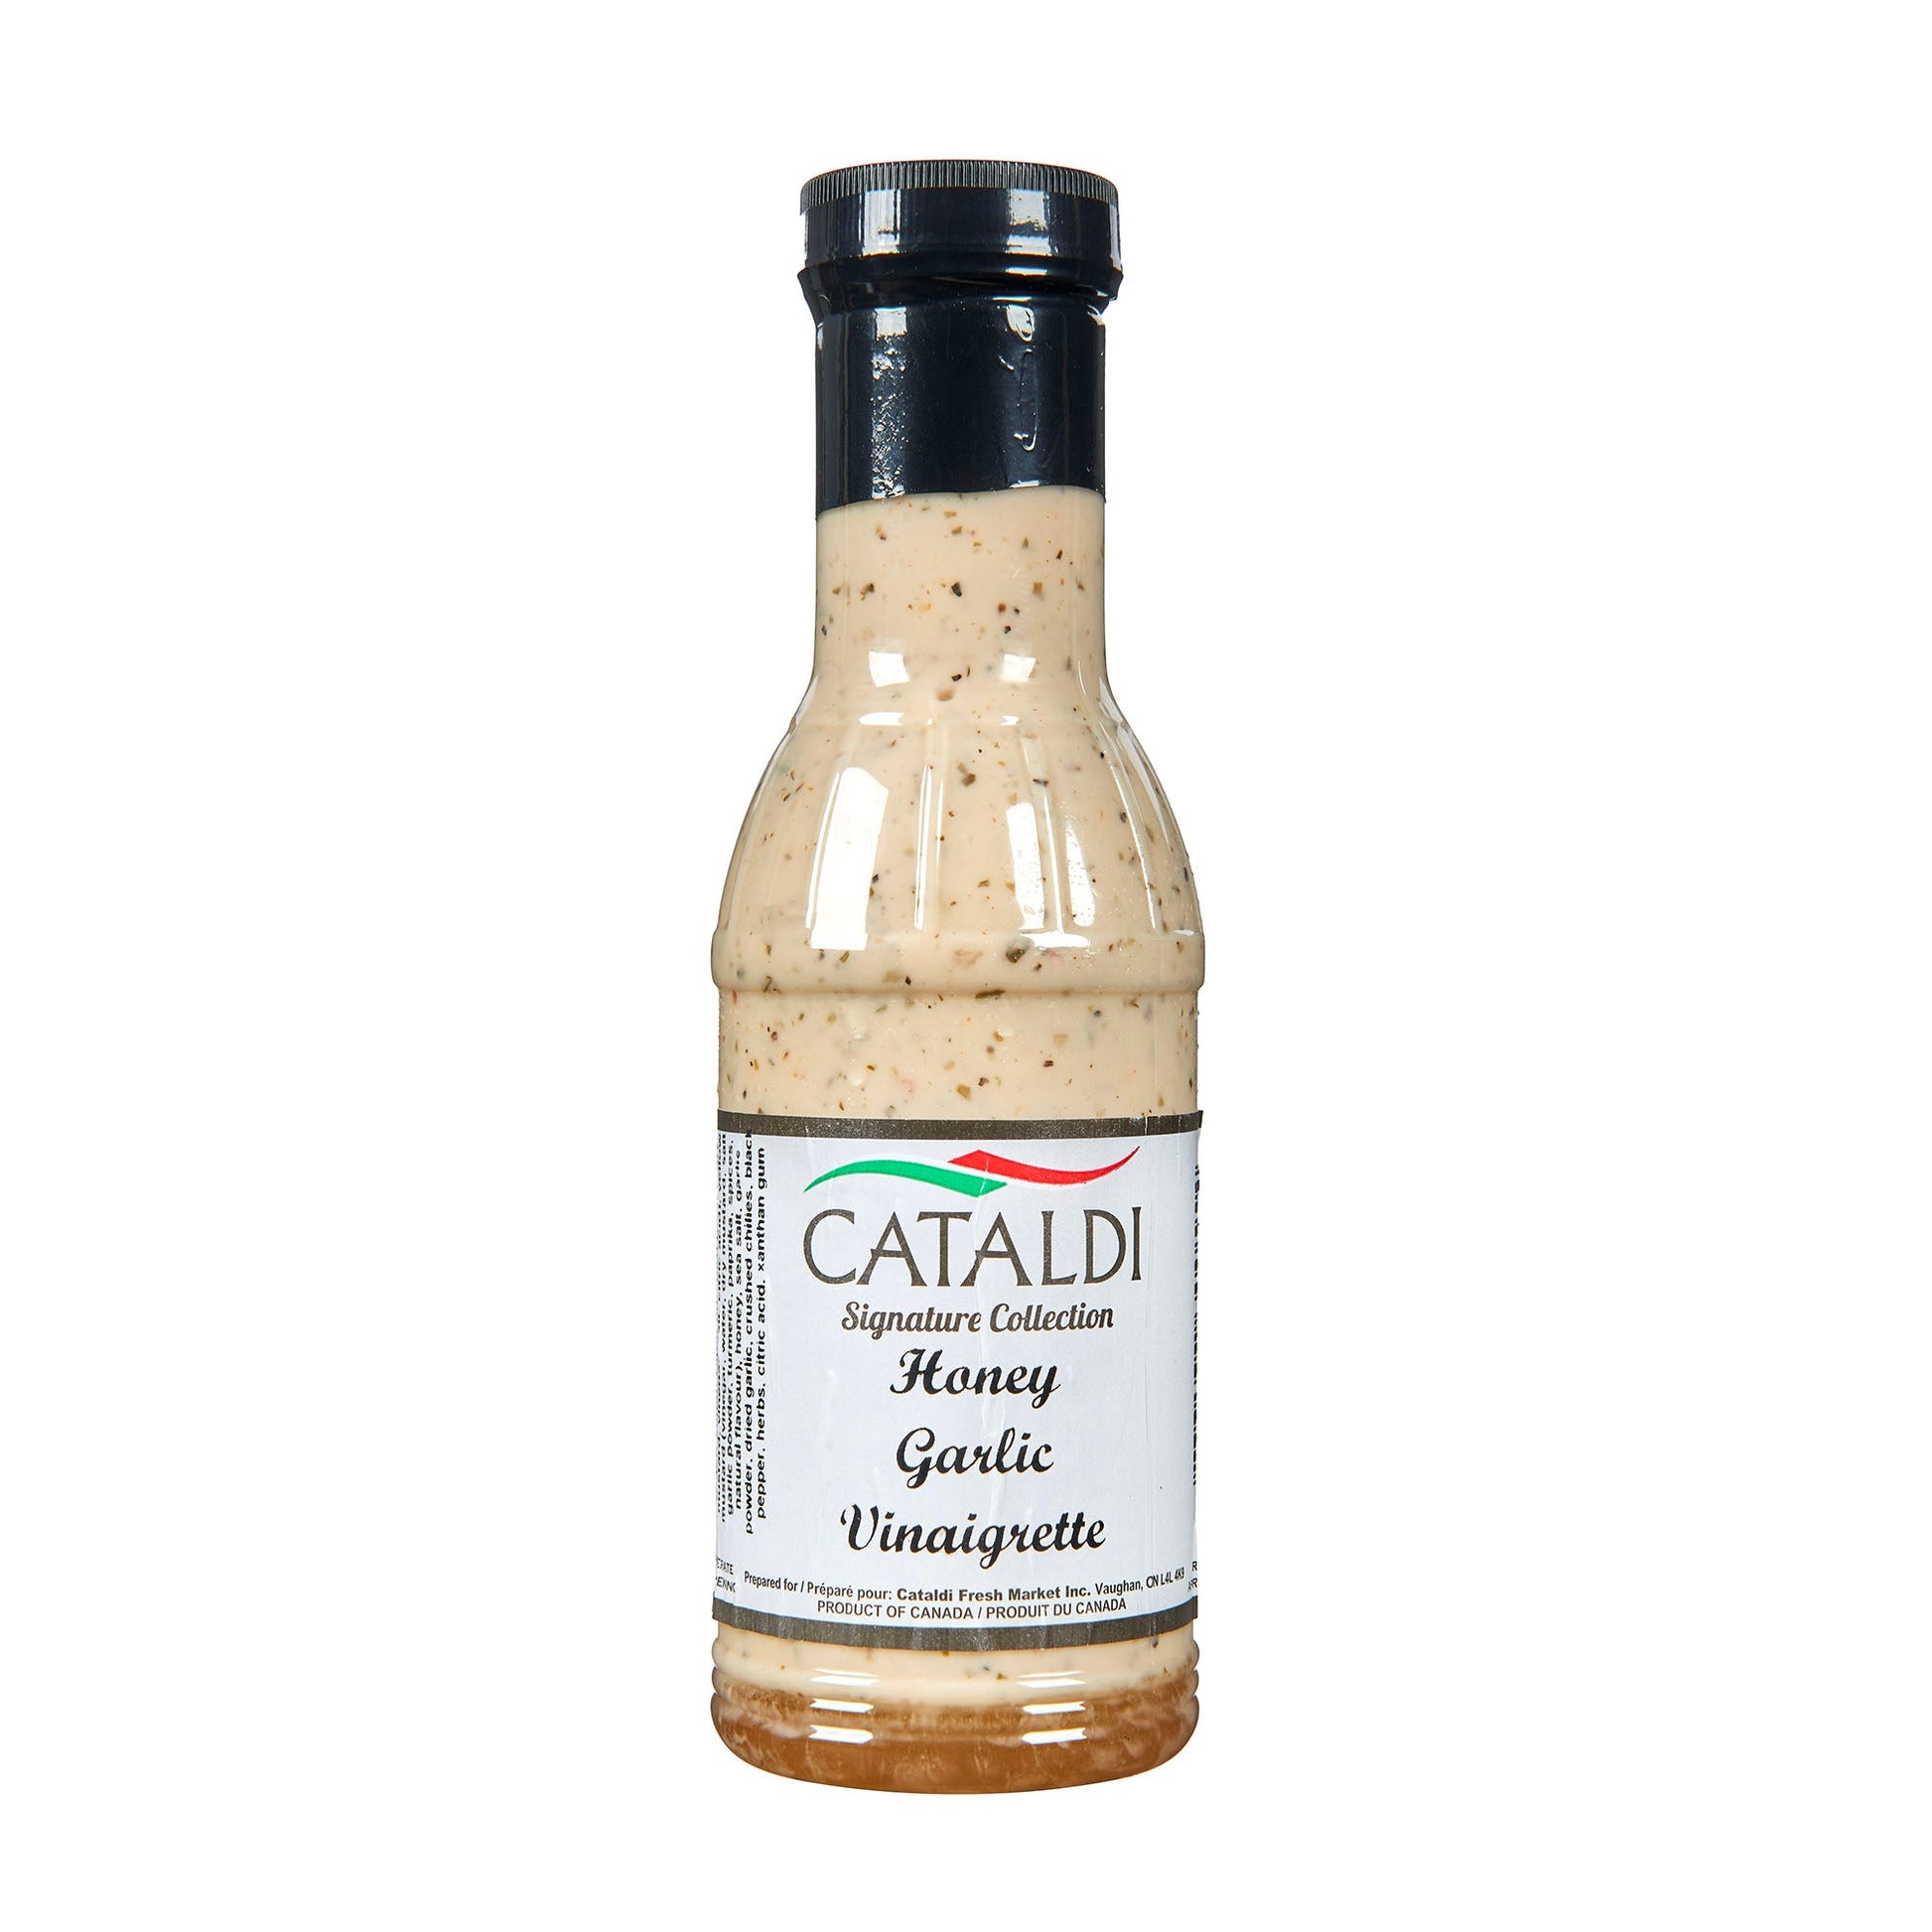 Cataldi Honey Garlic